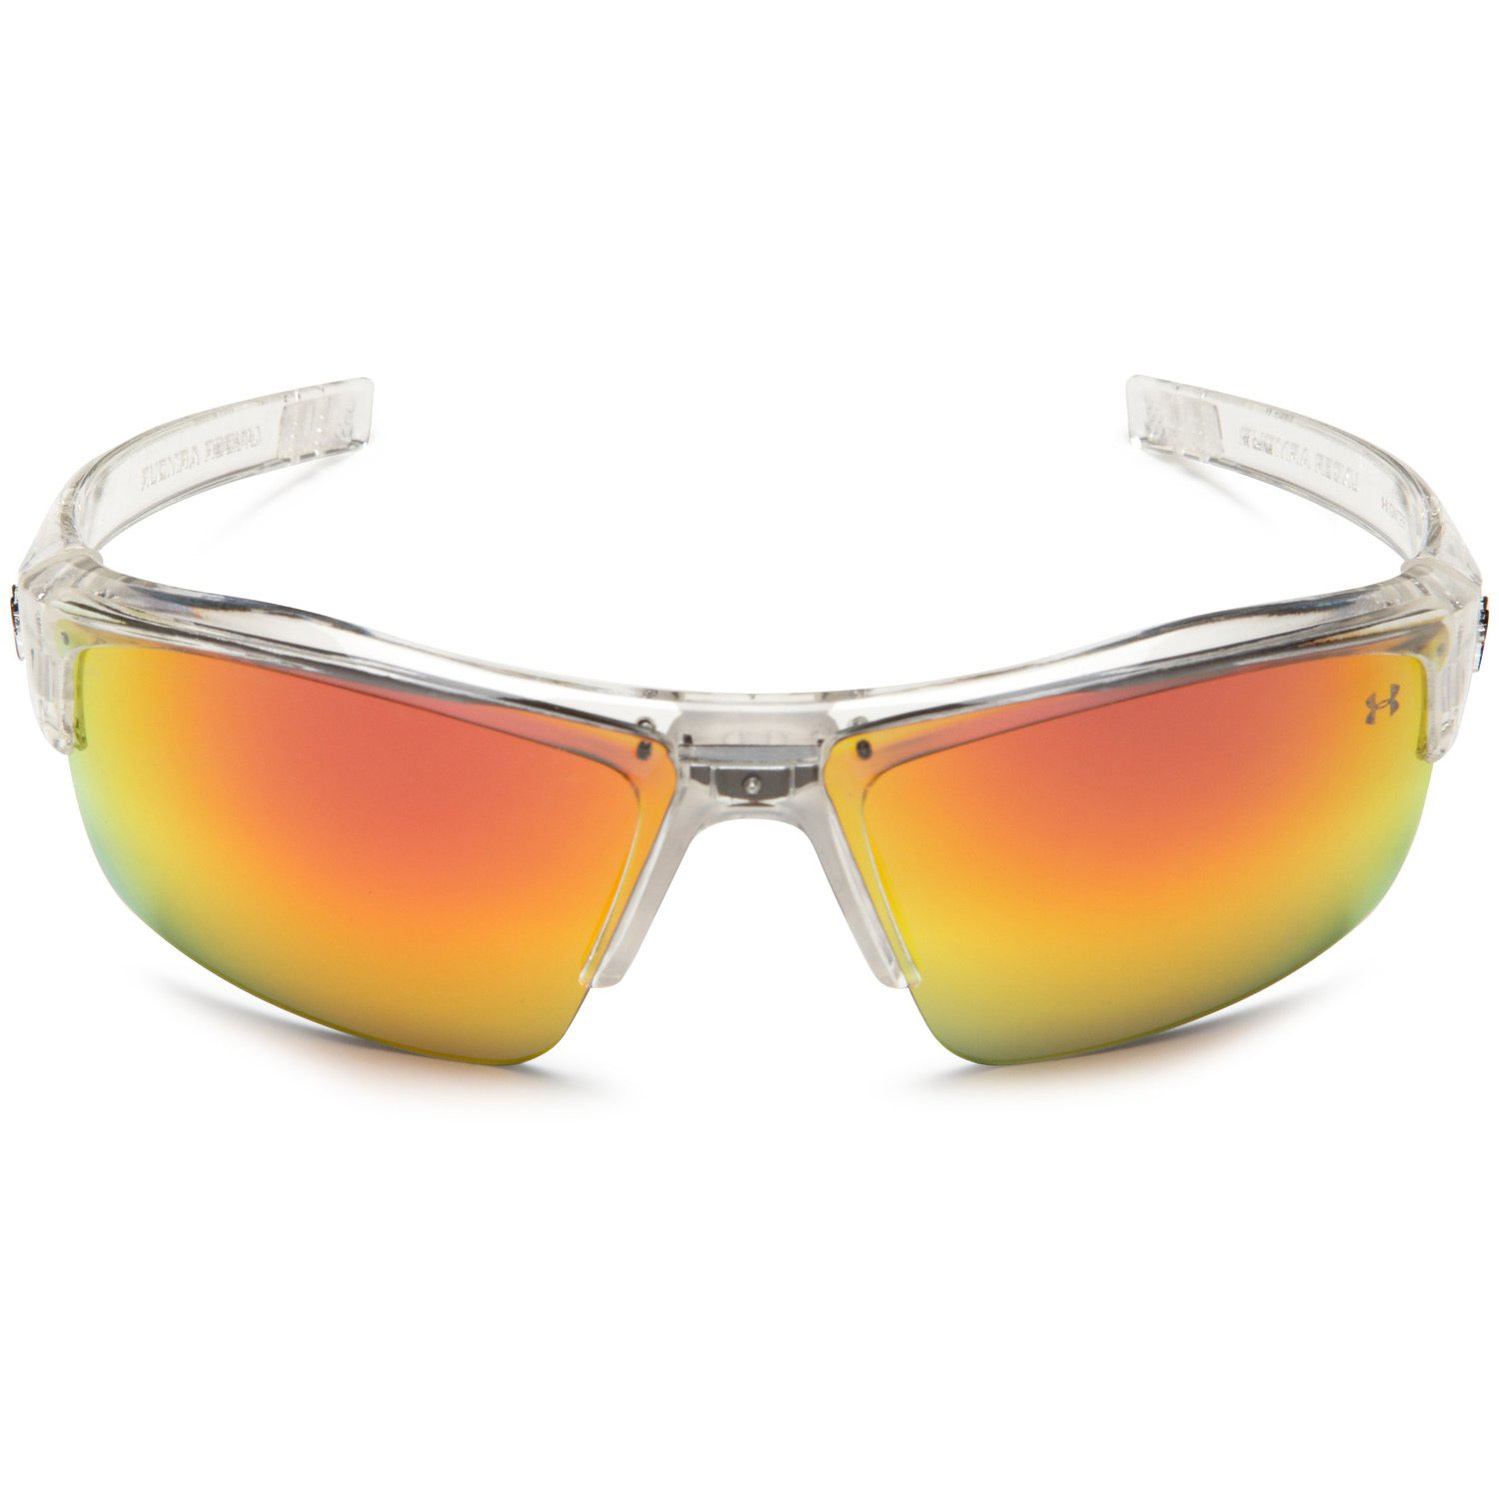 Under Armour UA Igniter Crystal Clear Frame Orange Mirror Multiflection Lens Sport Sunglasses - image 2 of 5